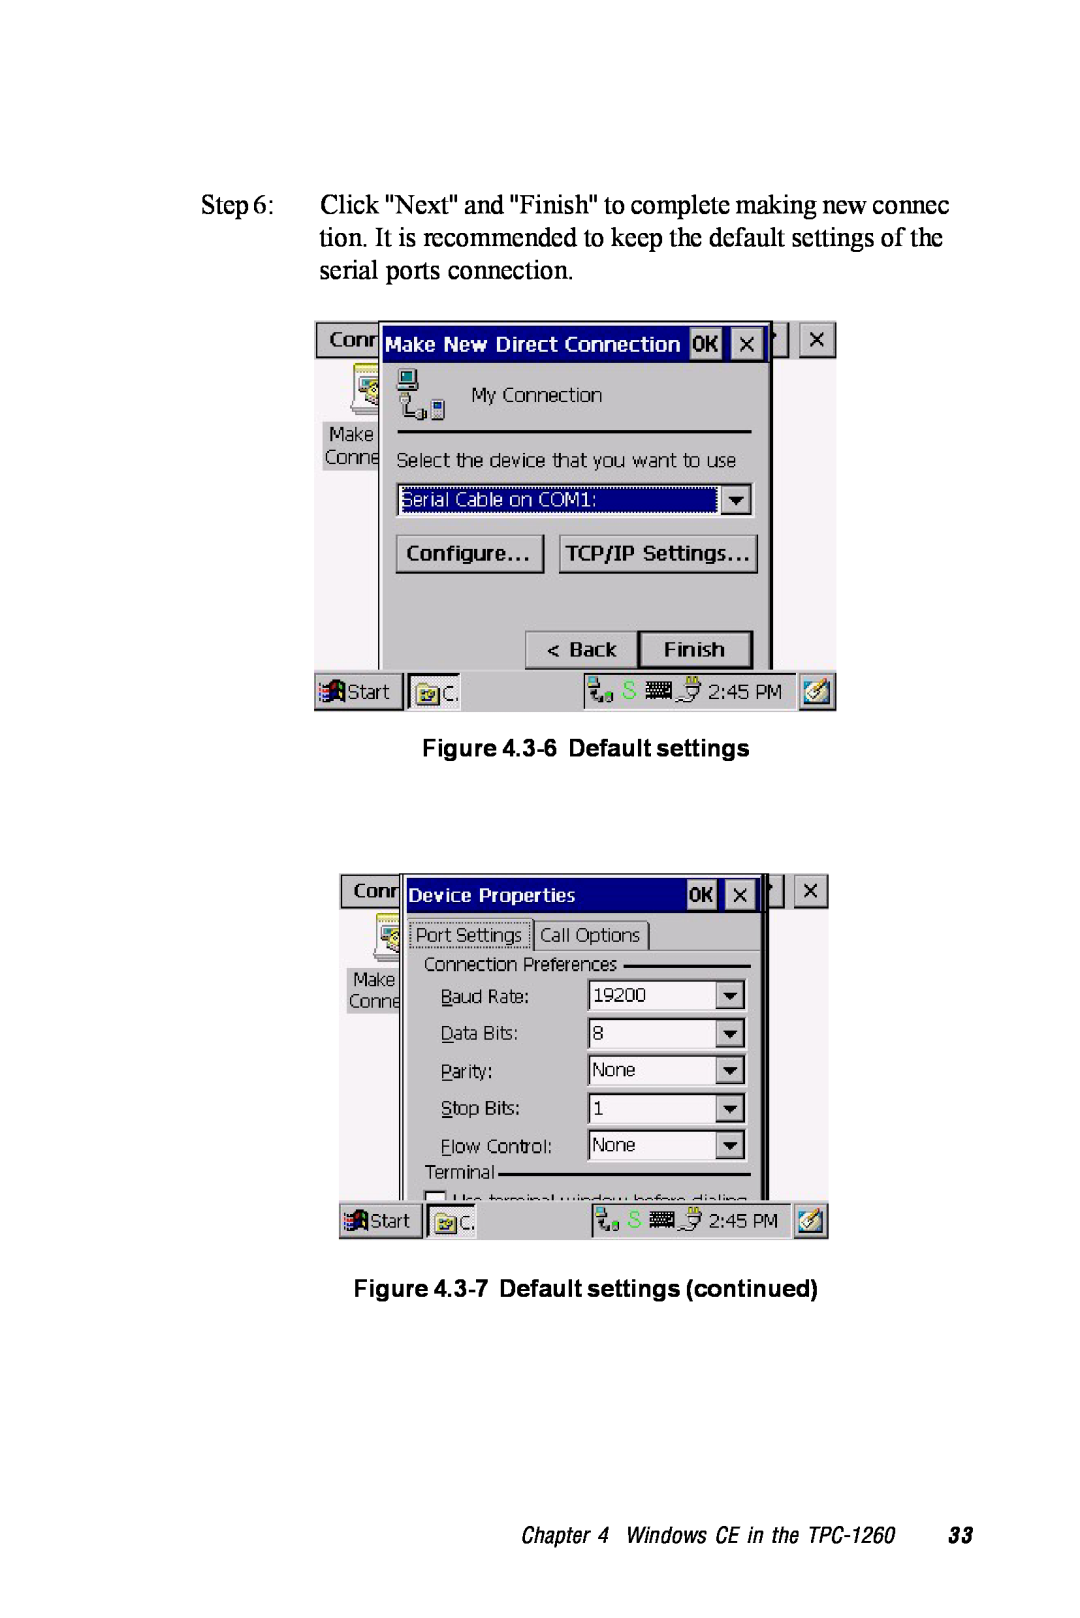 Advantech manual 3-6 Default settings .3-7 Default settings continued, Windows CE in the TPC-1260 